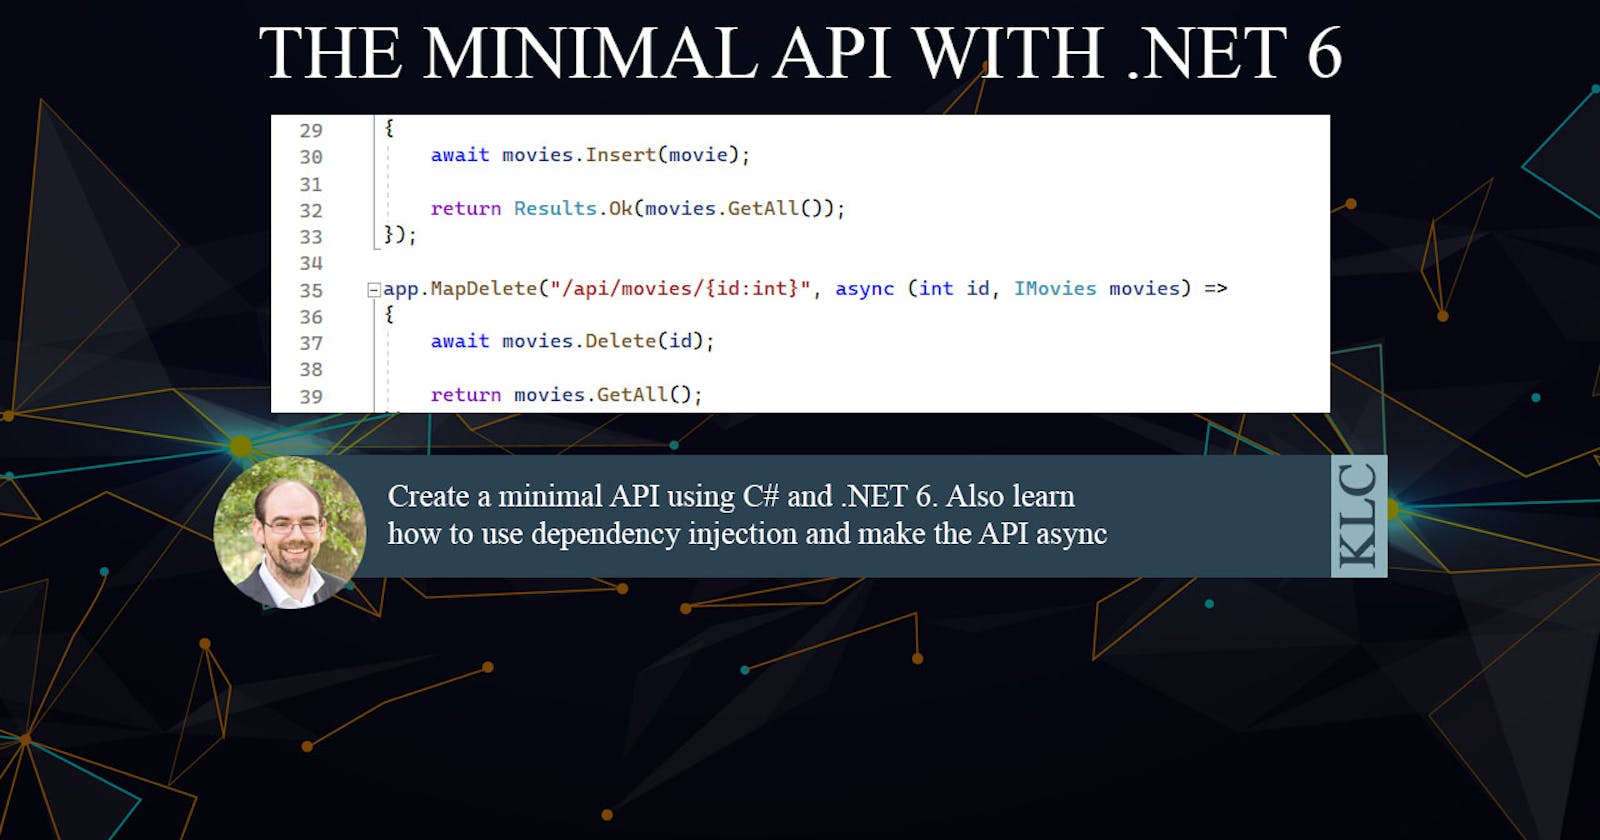 A minimal API with .NET 6 using C#